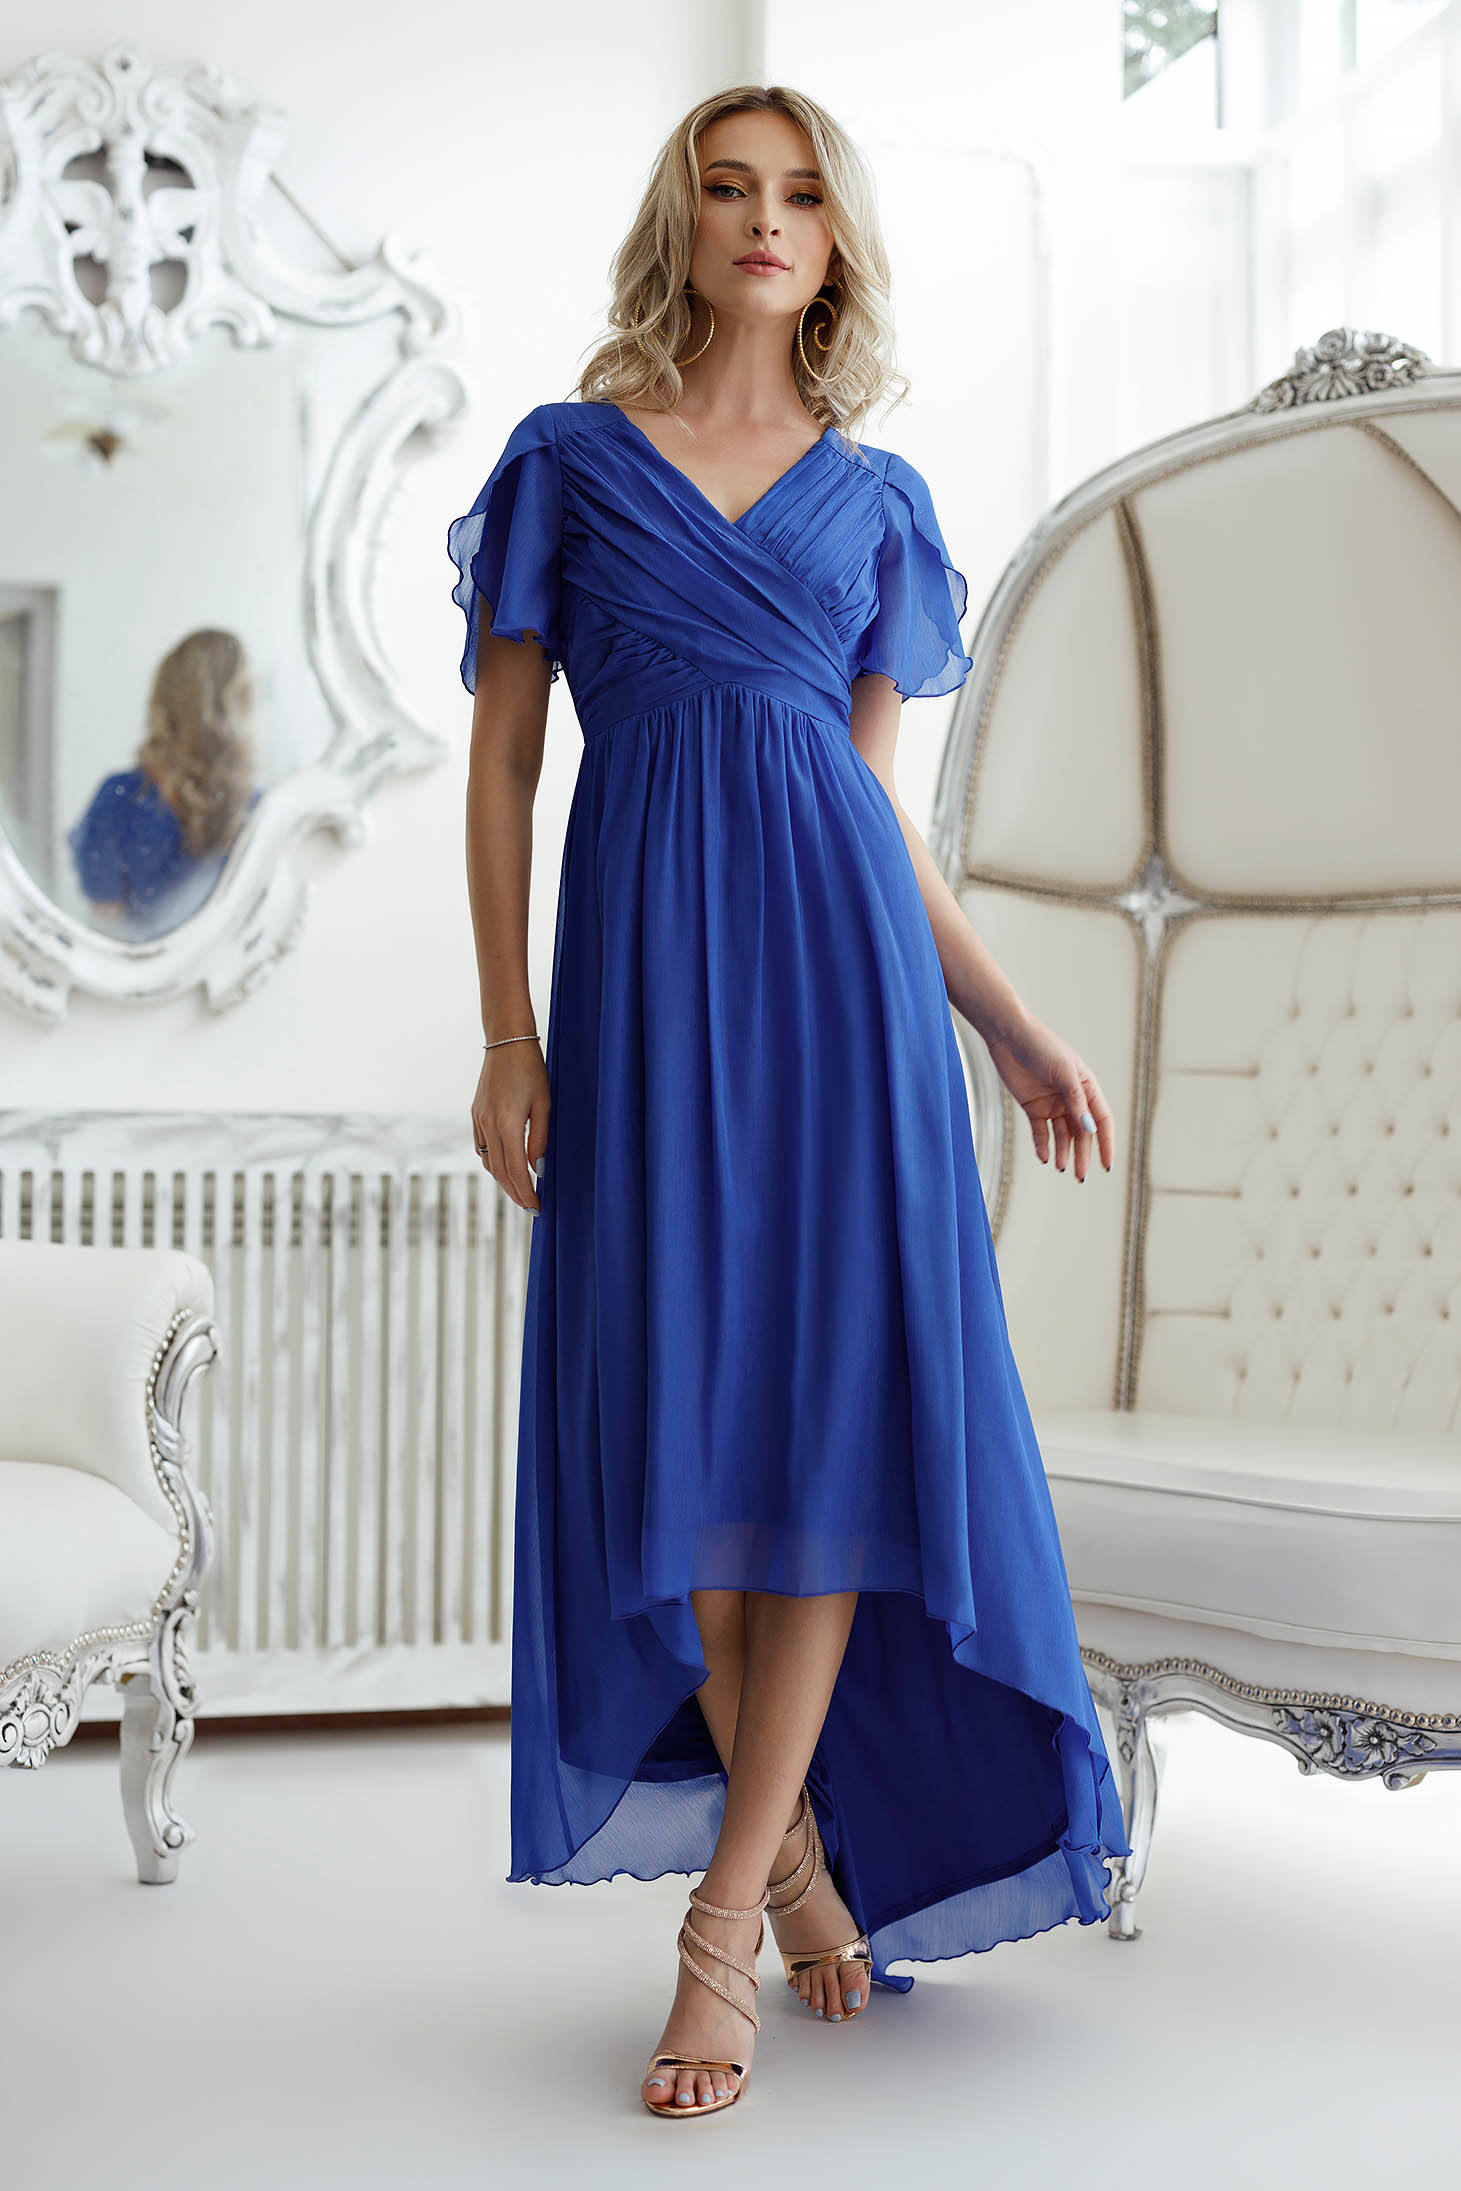 Asymmetric Blue Glitter Chiffon Dress - Artista 1 - StarShinerS.com